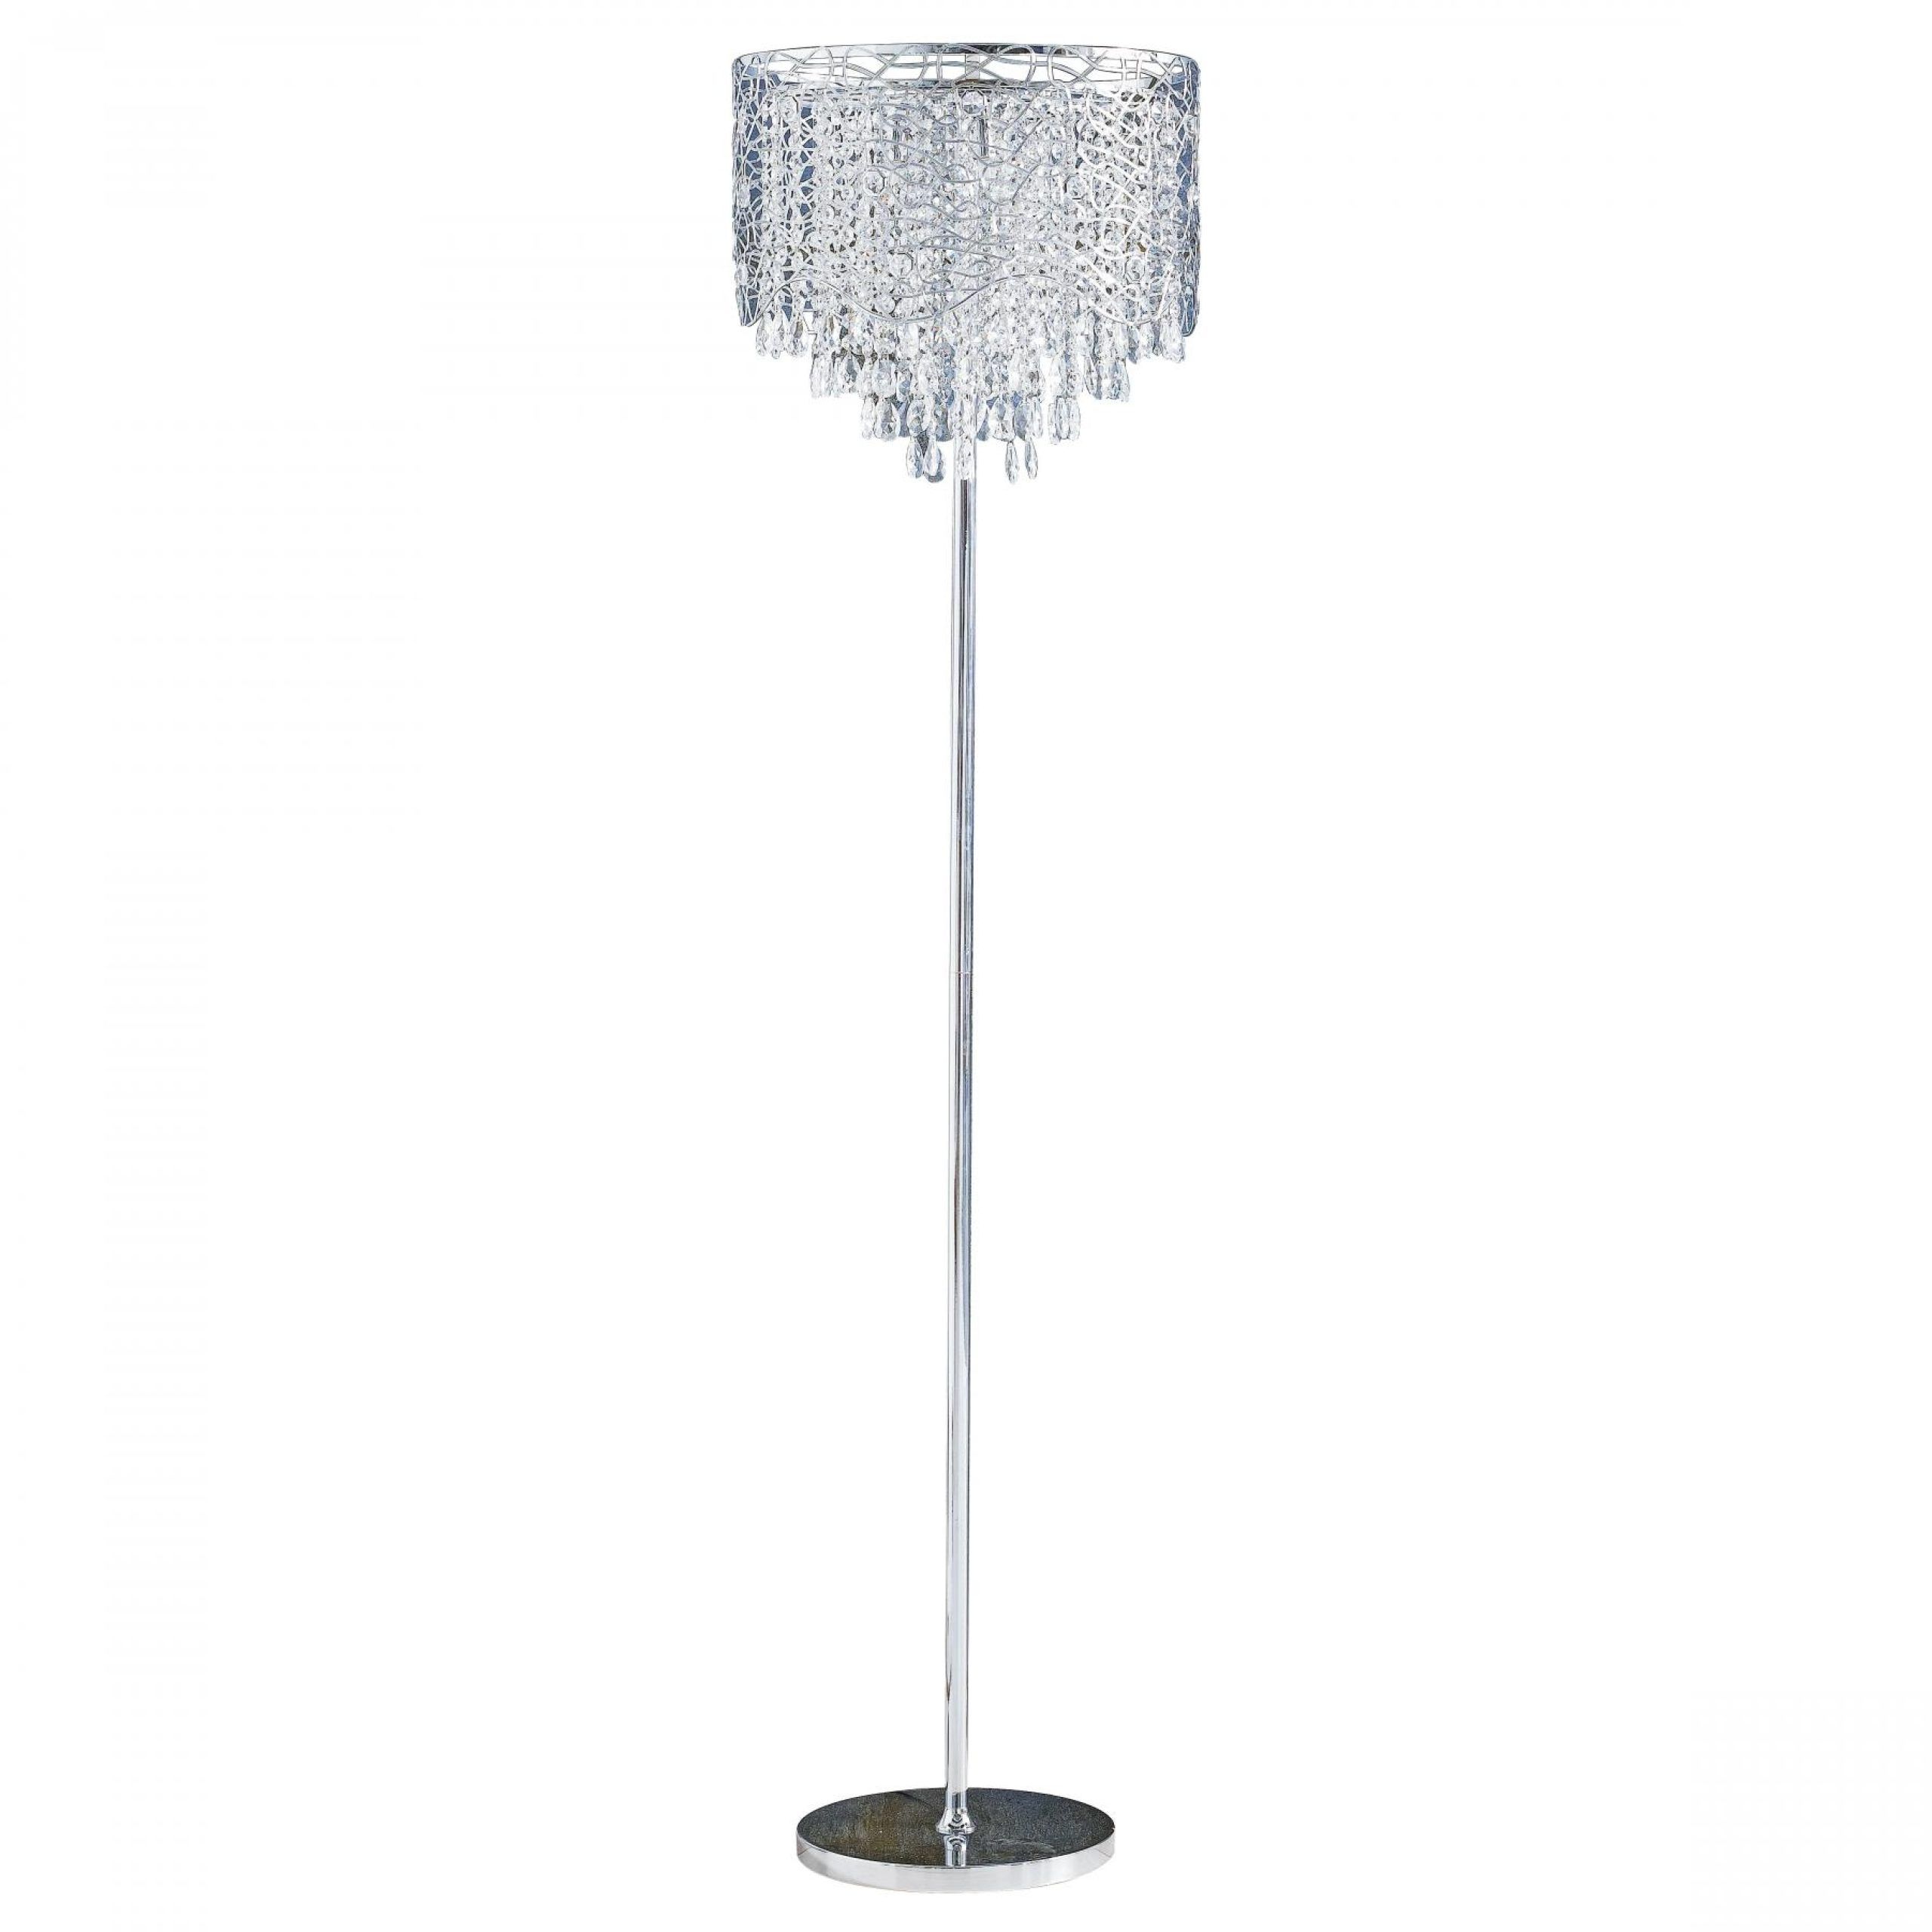 Buy Fabulous Chrome Floor Lamp | Harvey Norman Au Regarding Chrome Crystal Tower Floor Lamps (View 7 of 15)